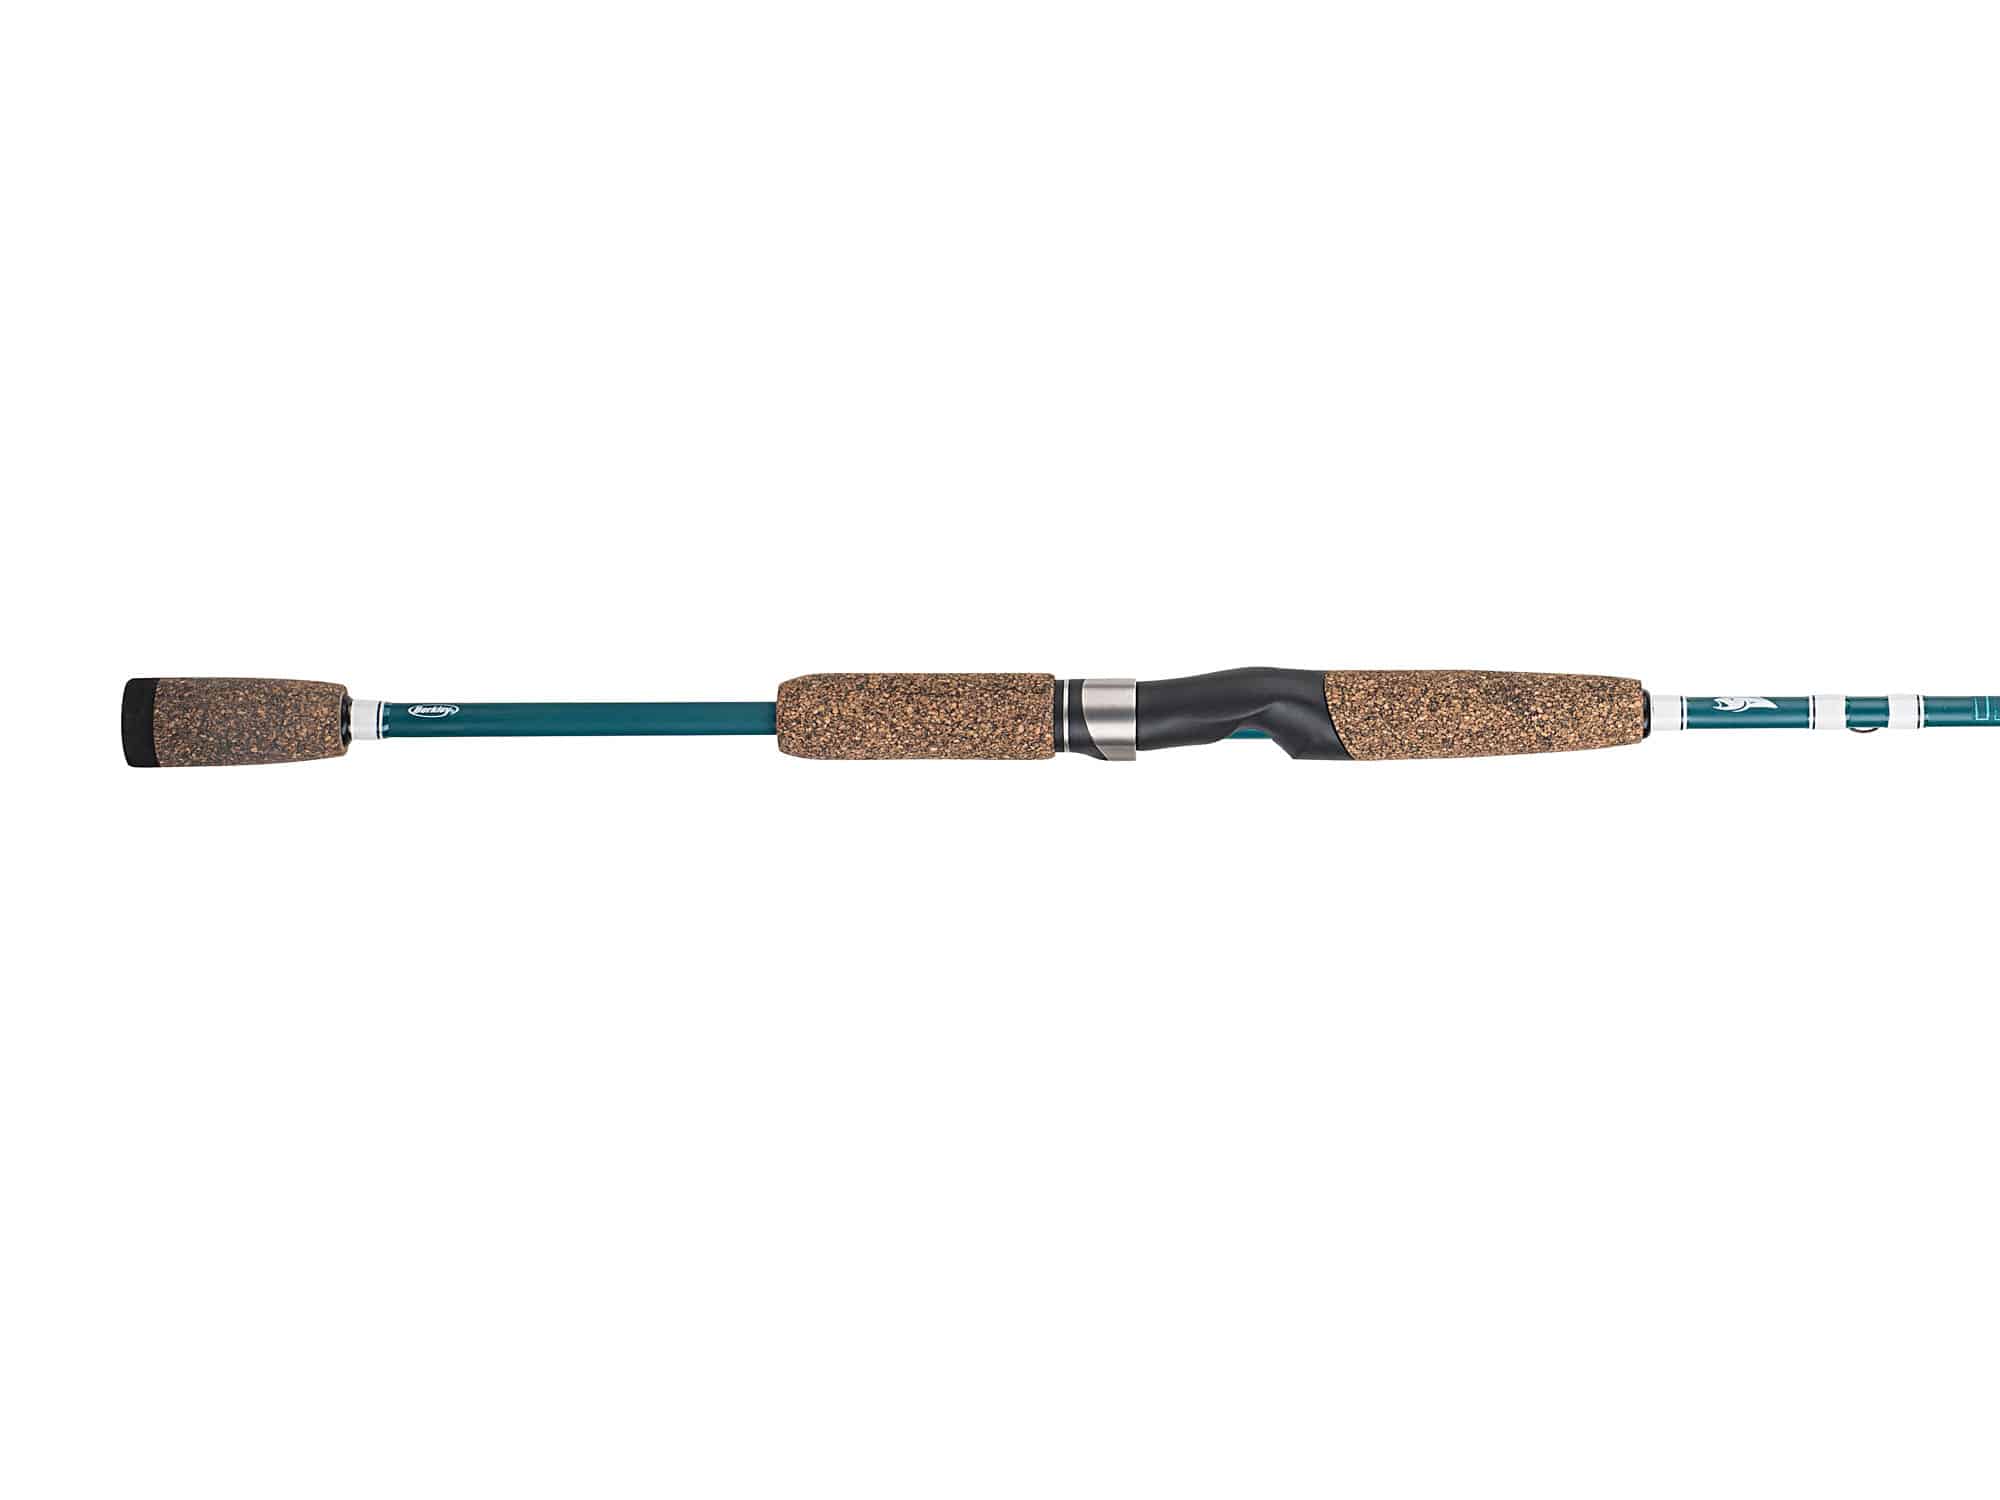 Berkeley's New Inshore Fishing Rod